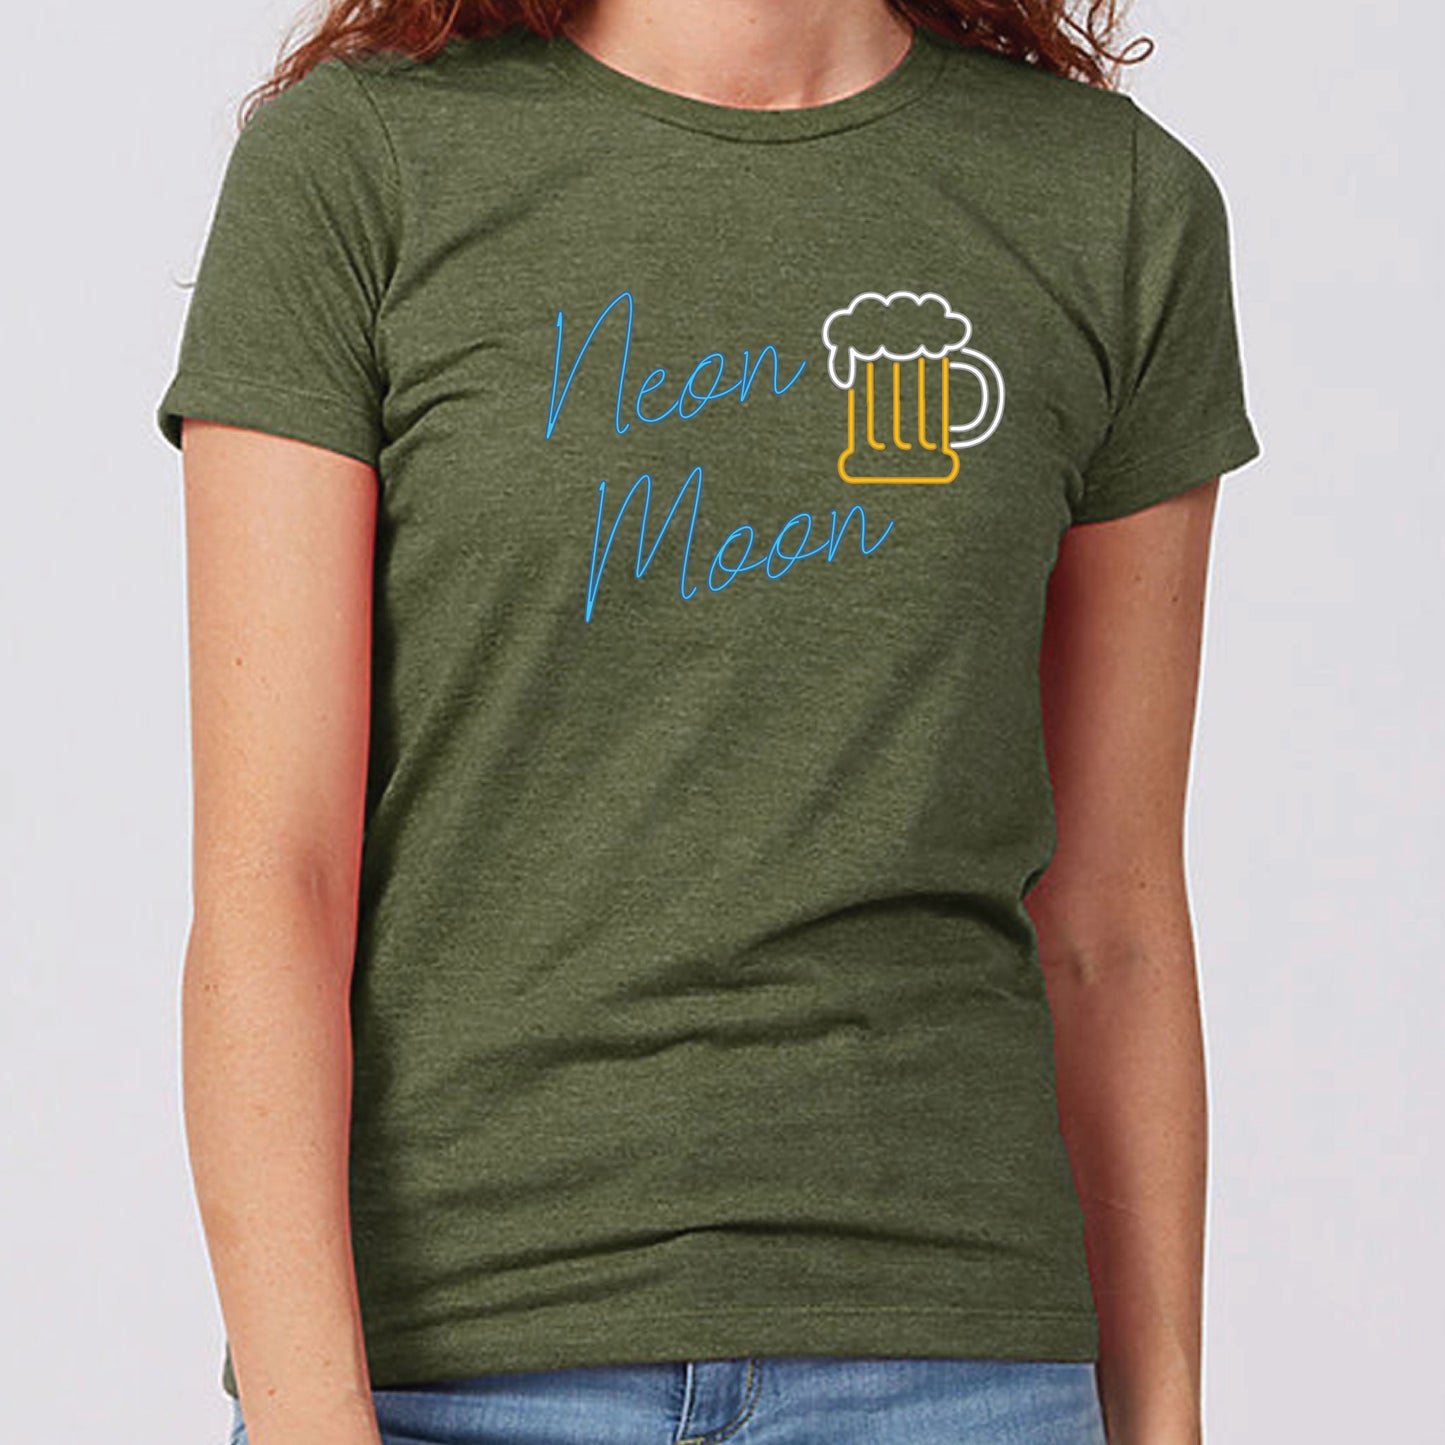 Neon Moon Women's Slim Fit T-Shirt